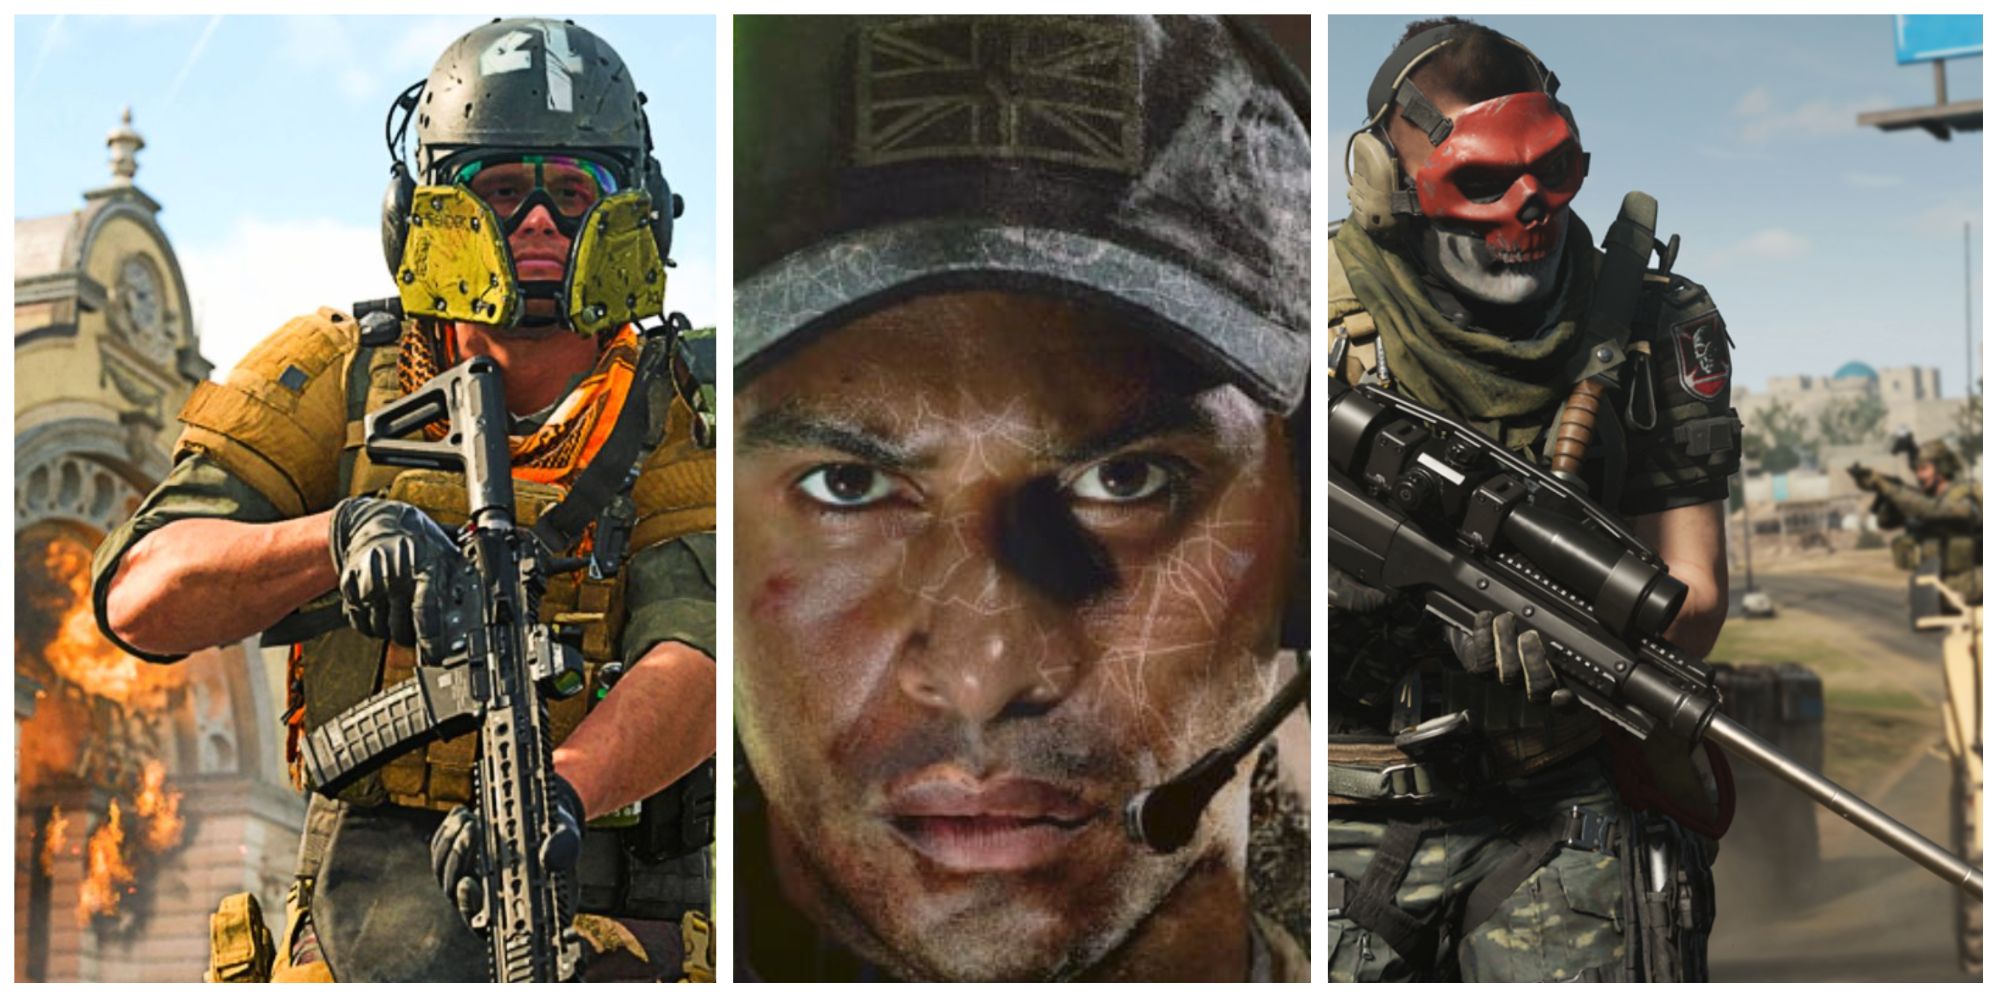 Modern Warfare II: Multiplayer tips for rookies